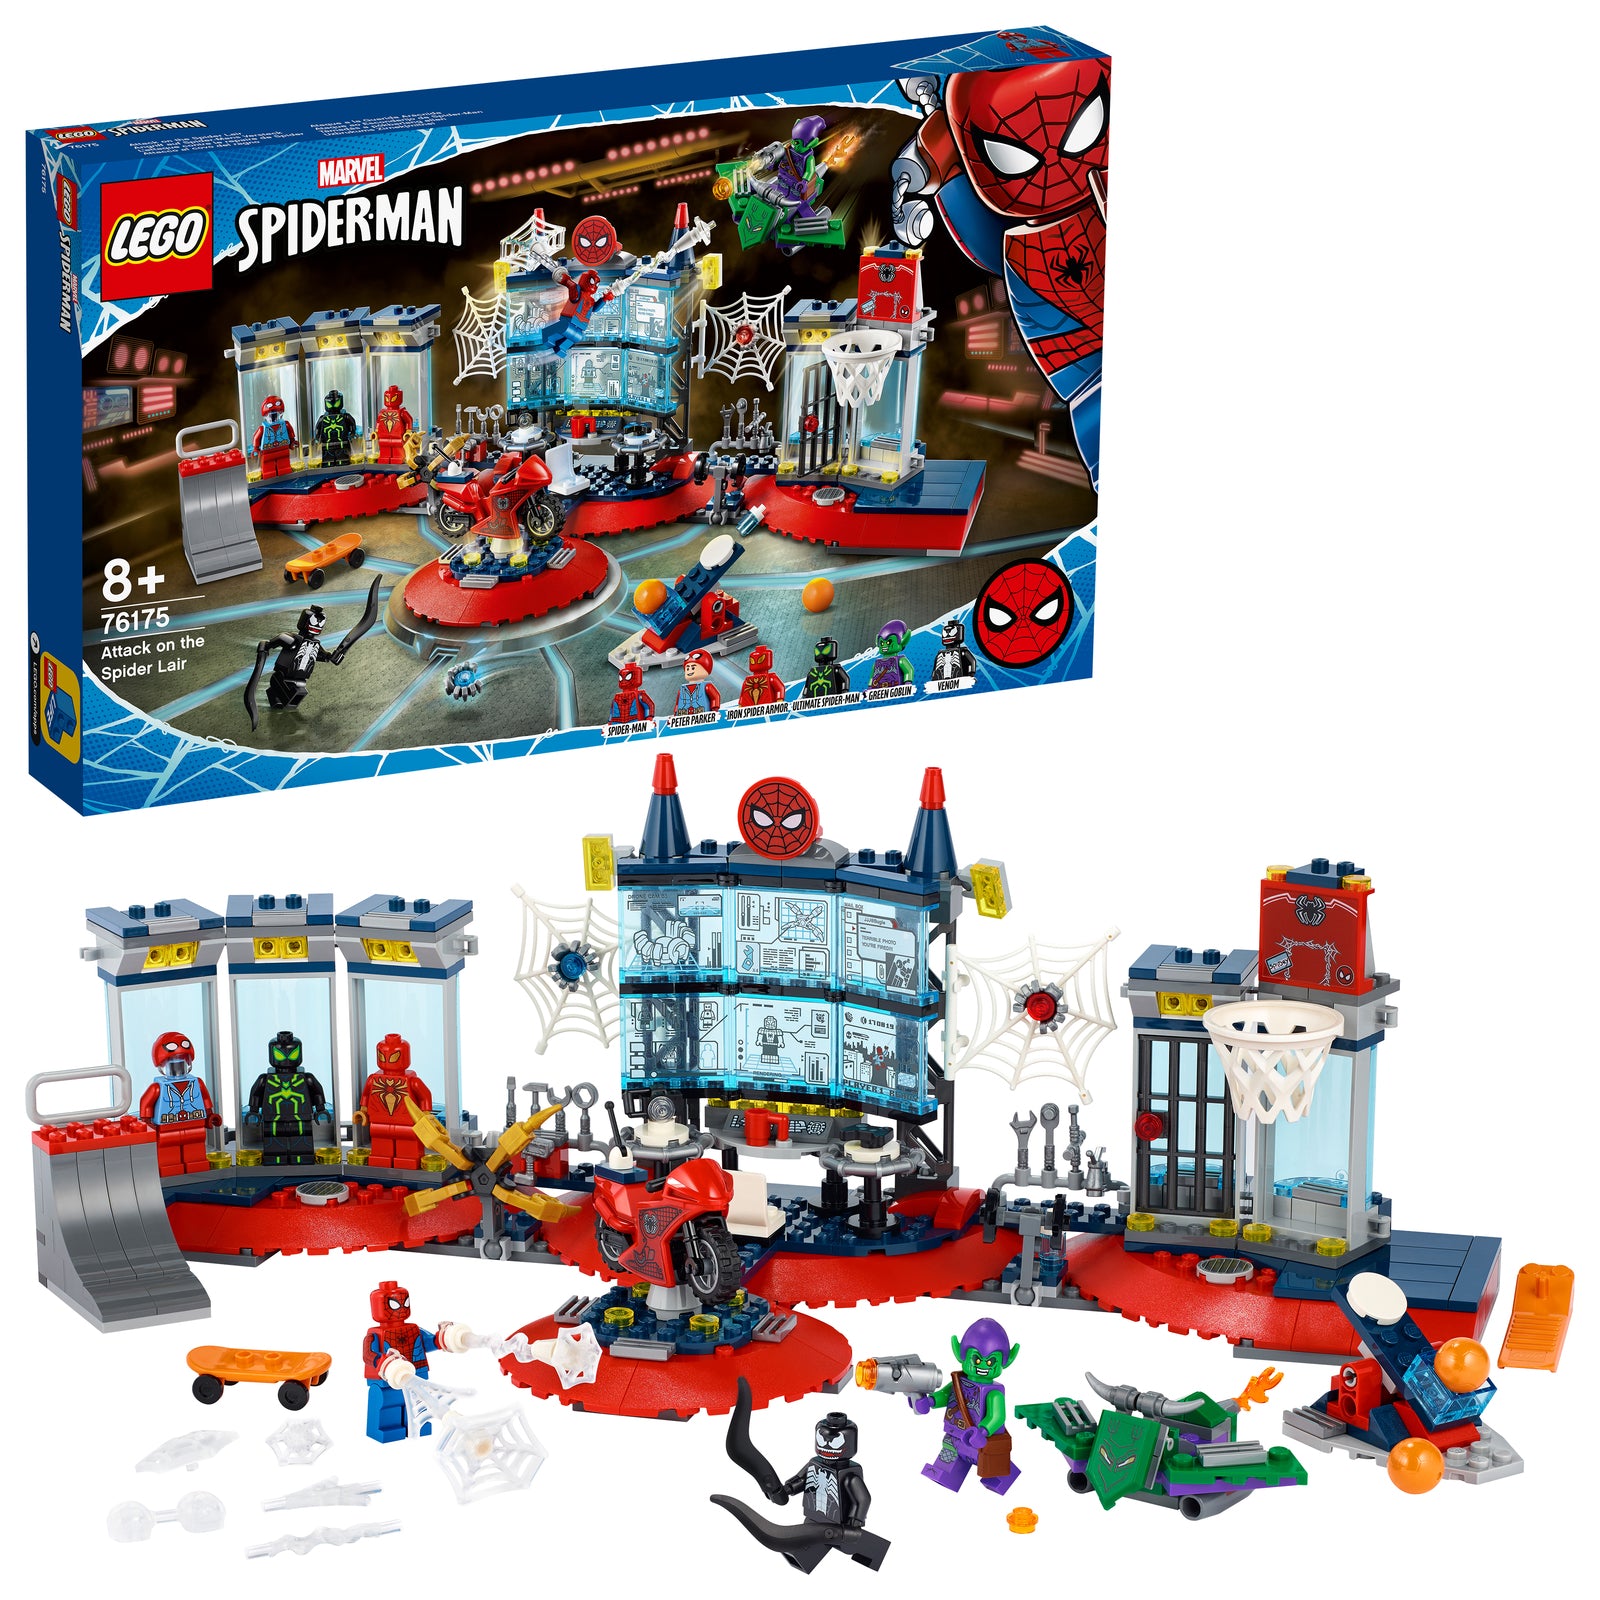 Comprar LEGO Marvel Super Heroes 2 - Deluxe Edition - Trivia PW